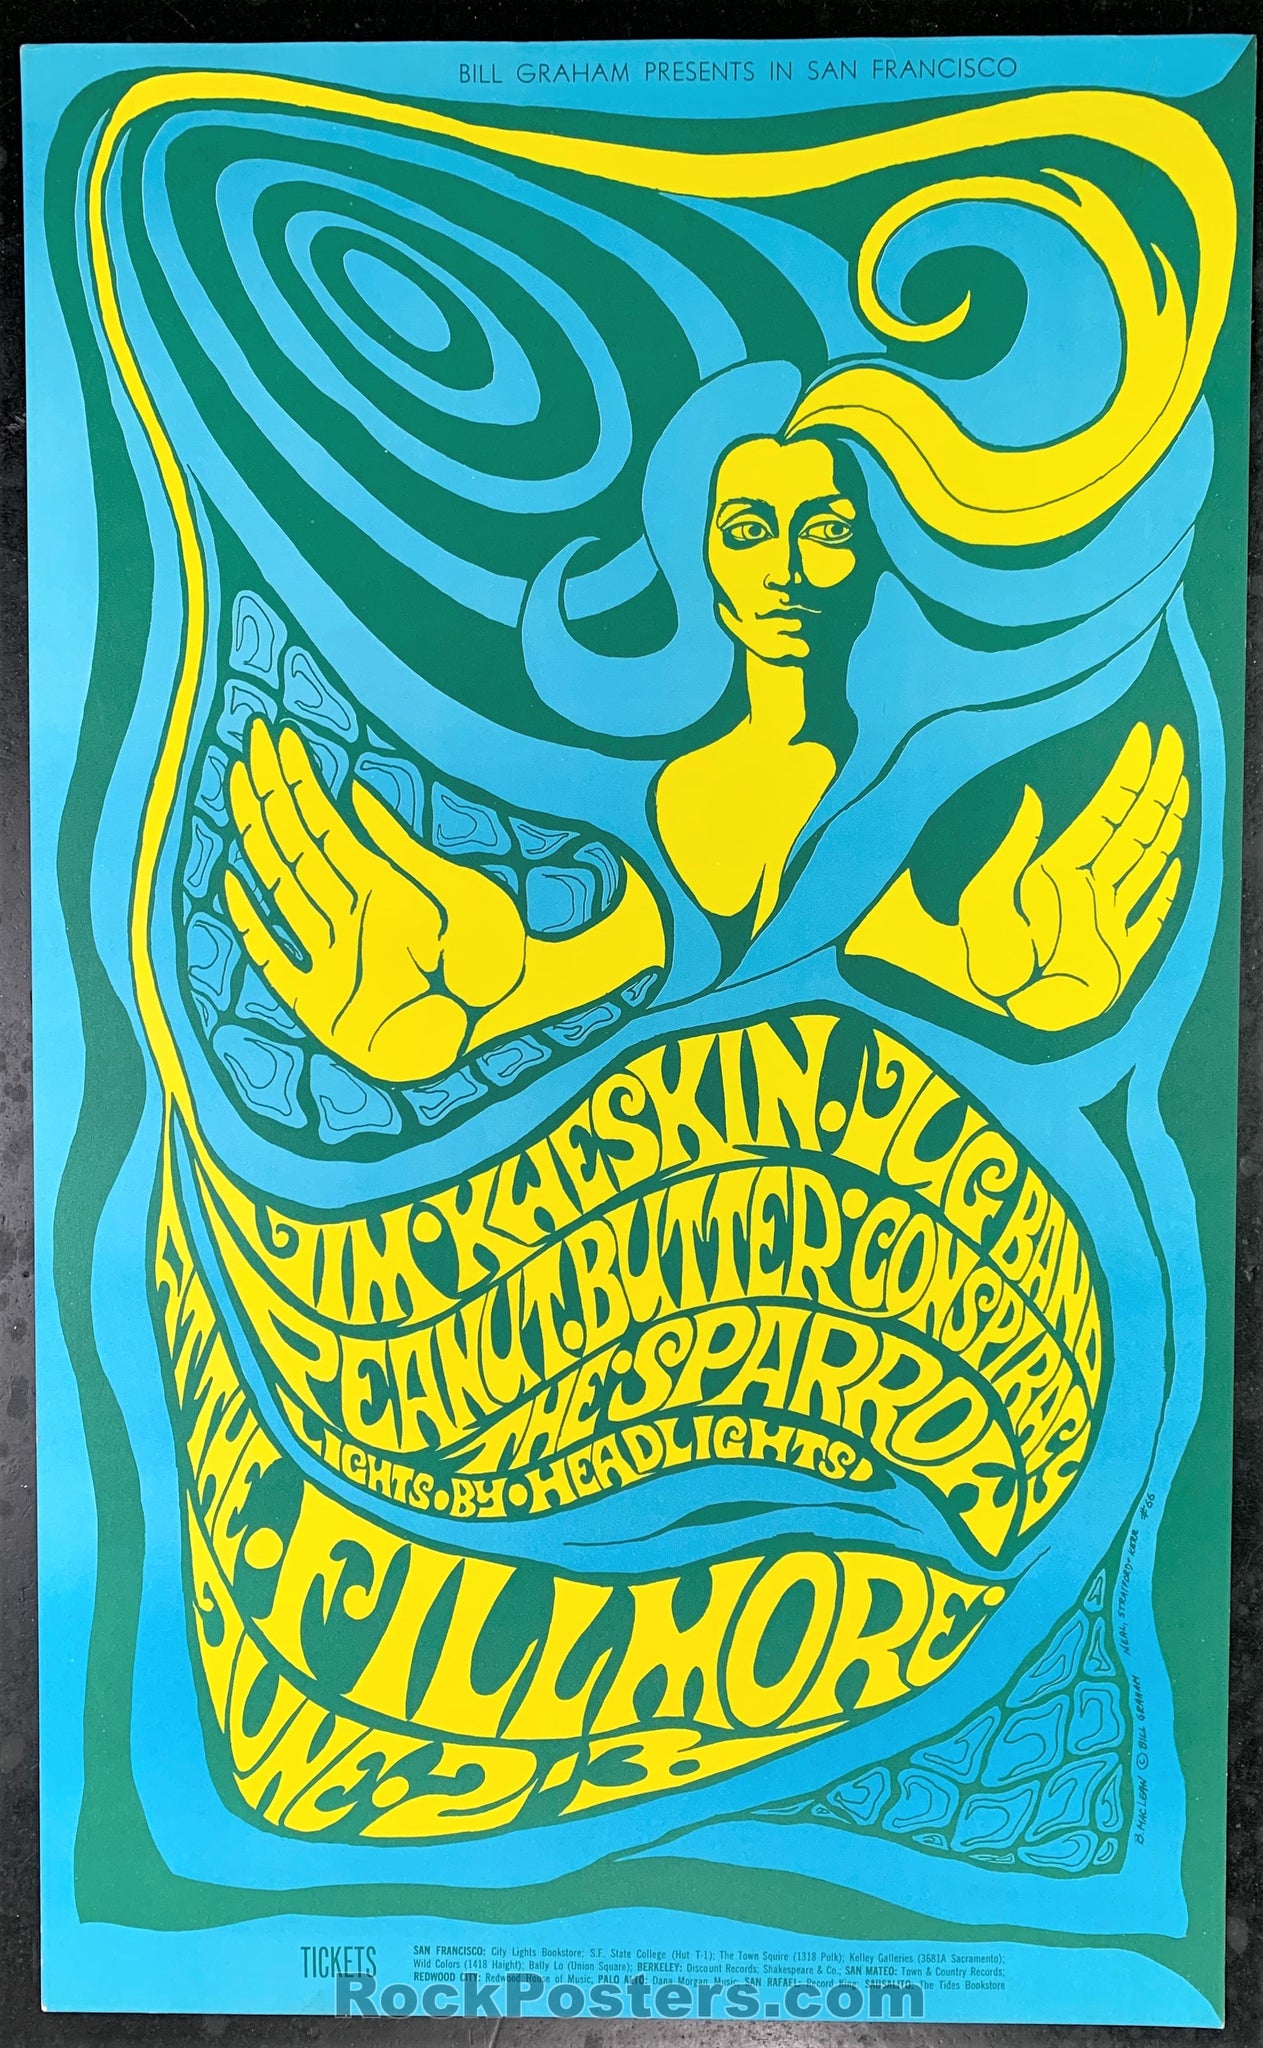 AUCTION - BG-66 - Jim Kweskin - 1967 Poster - Fillmore Auditorium - Near Mint